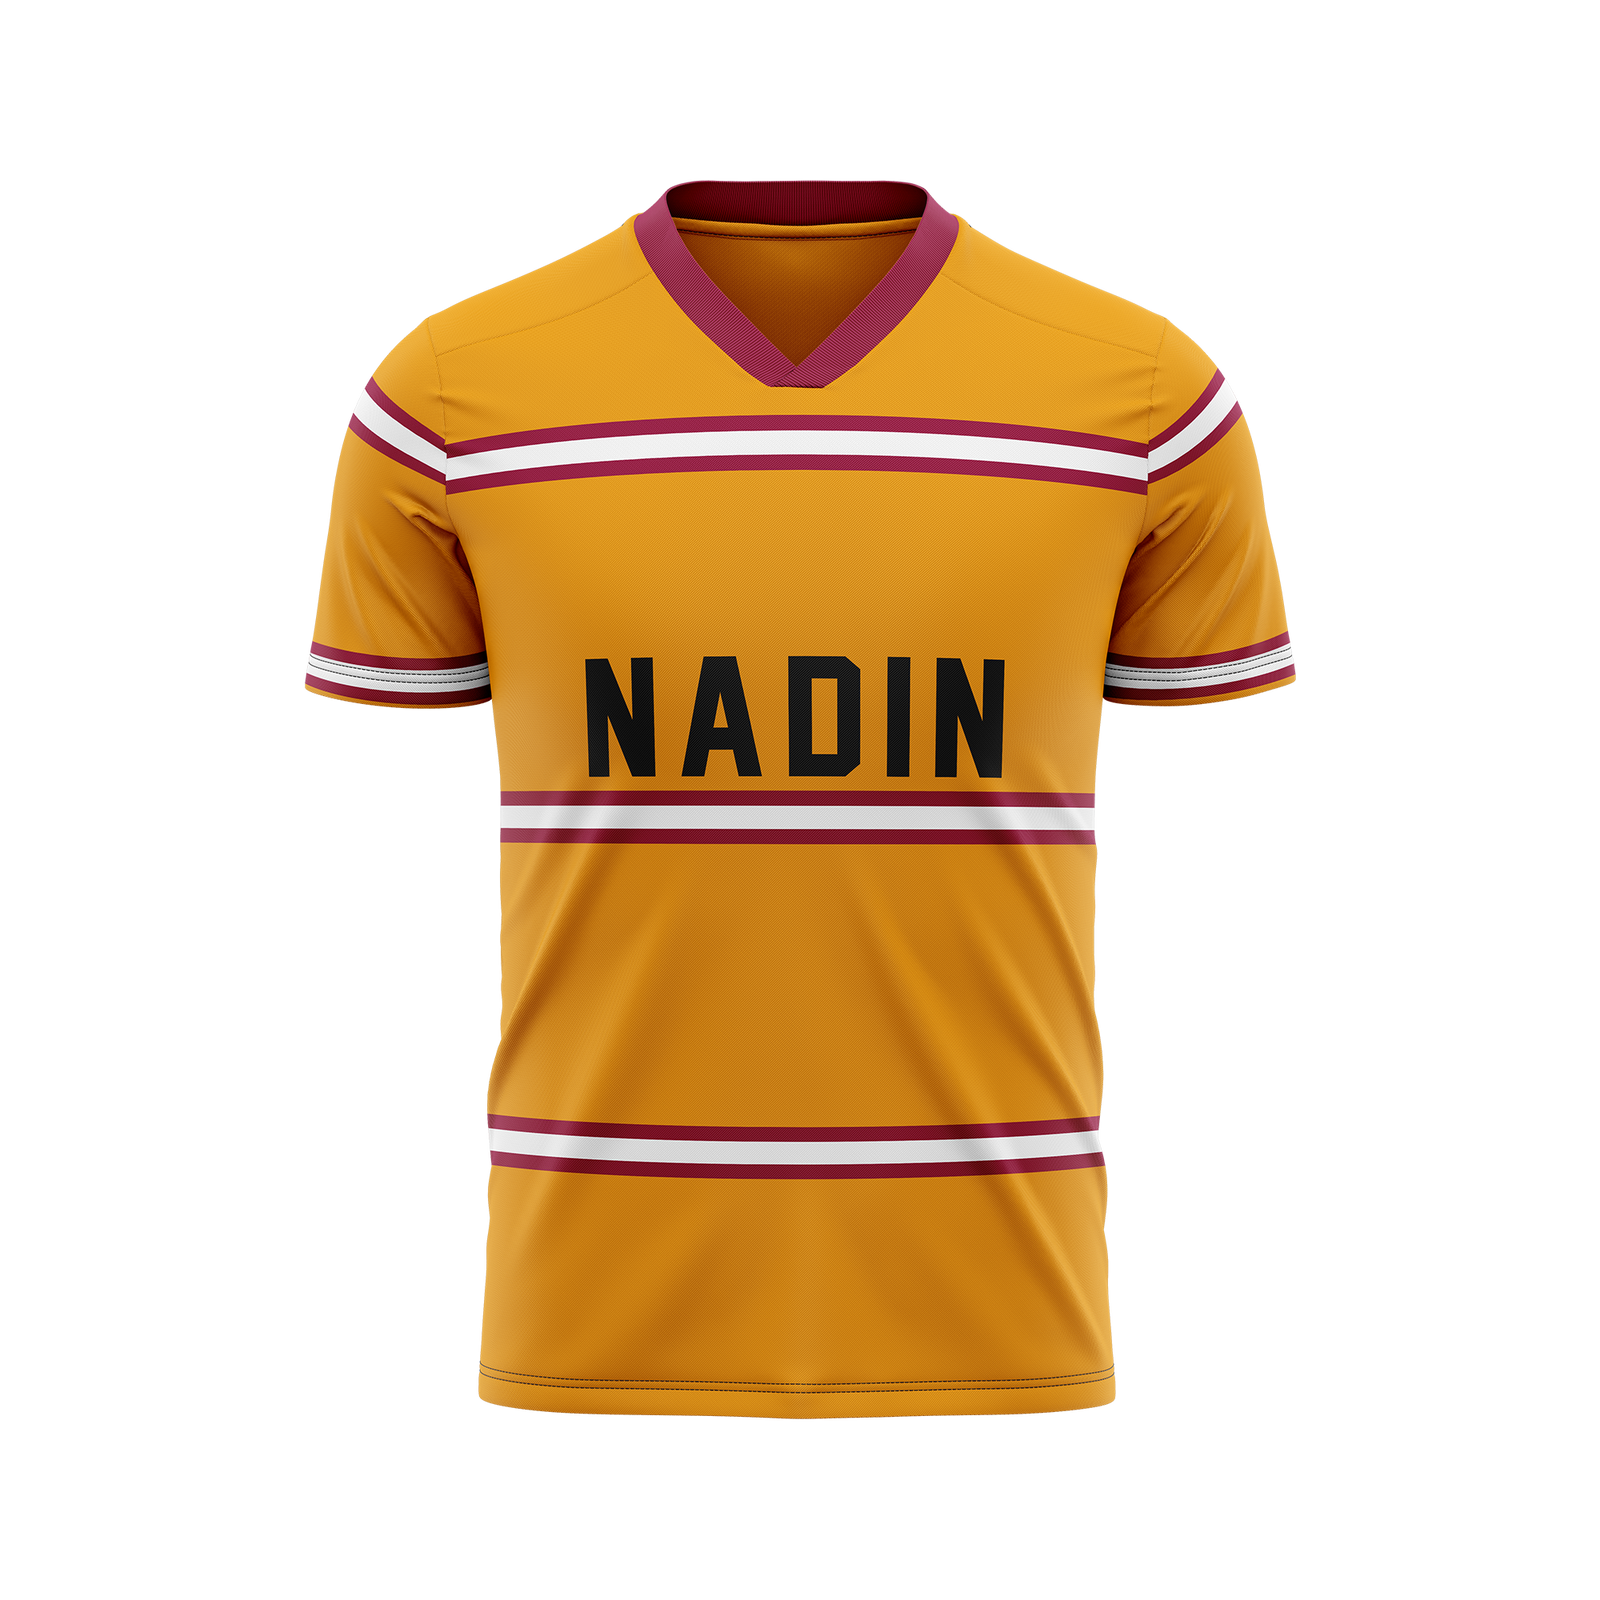 Seaton Nadin Shirt